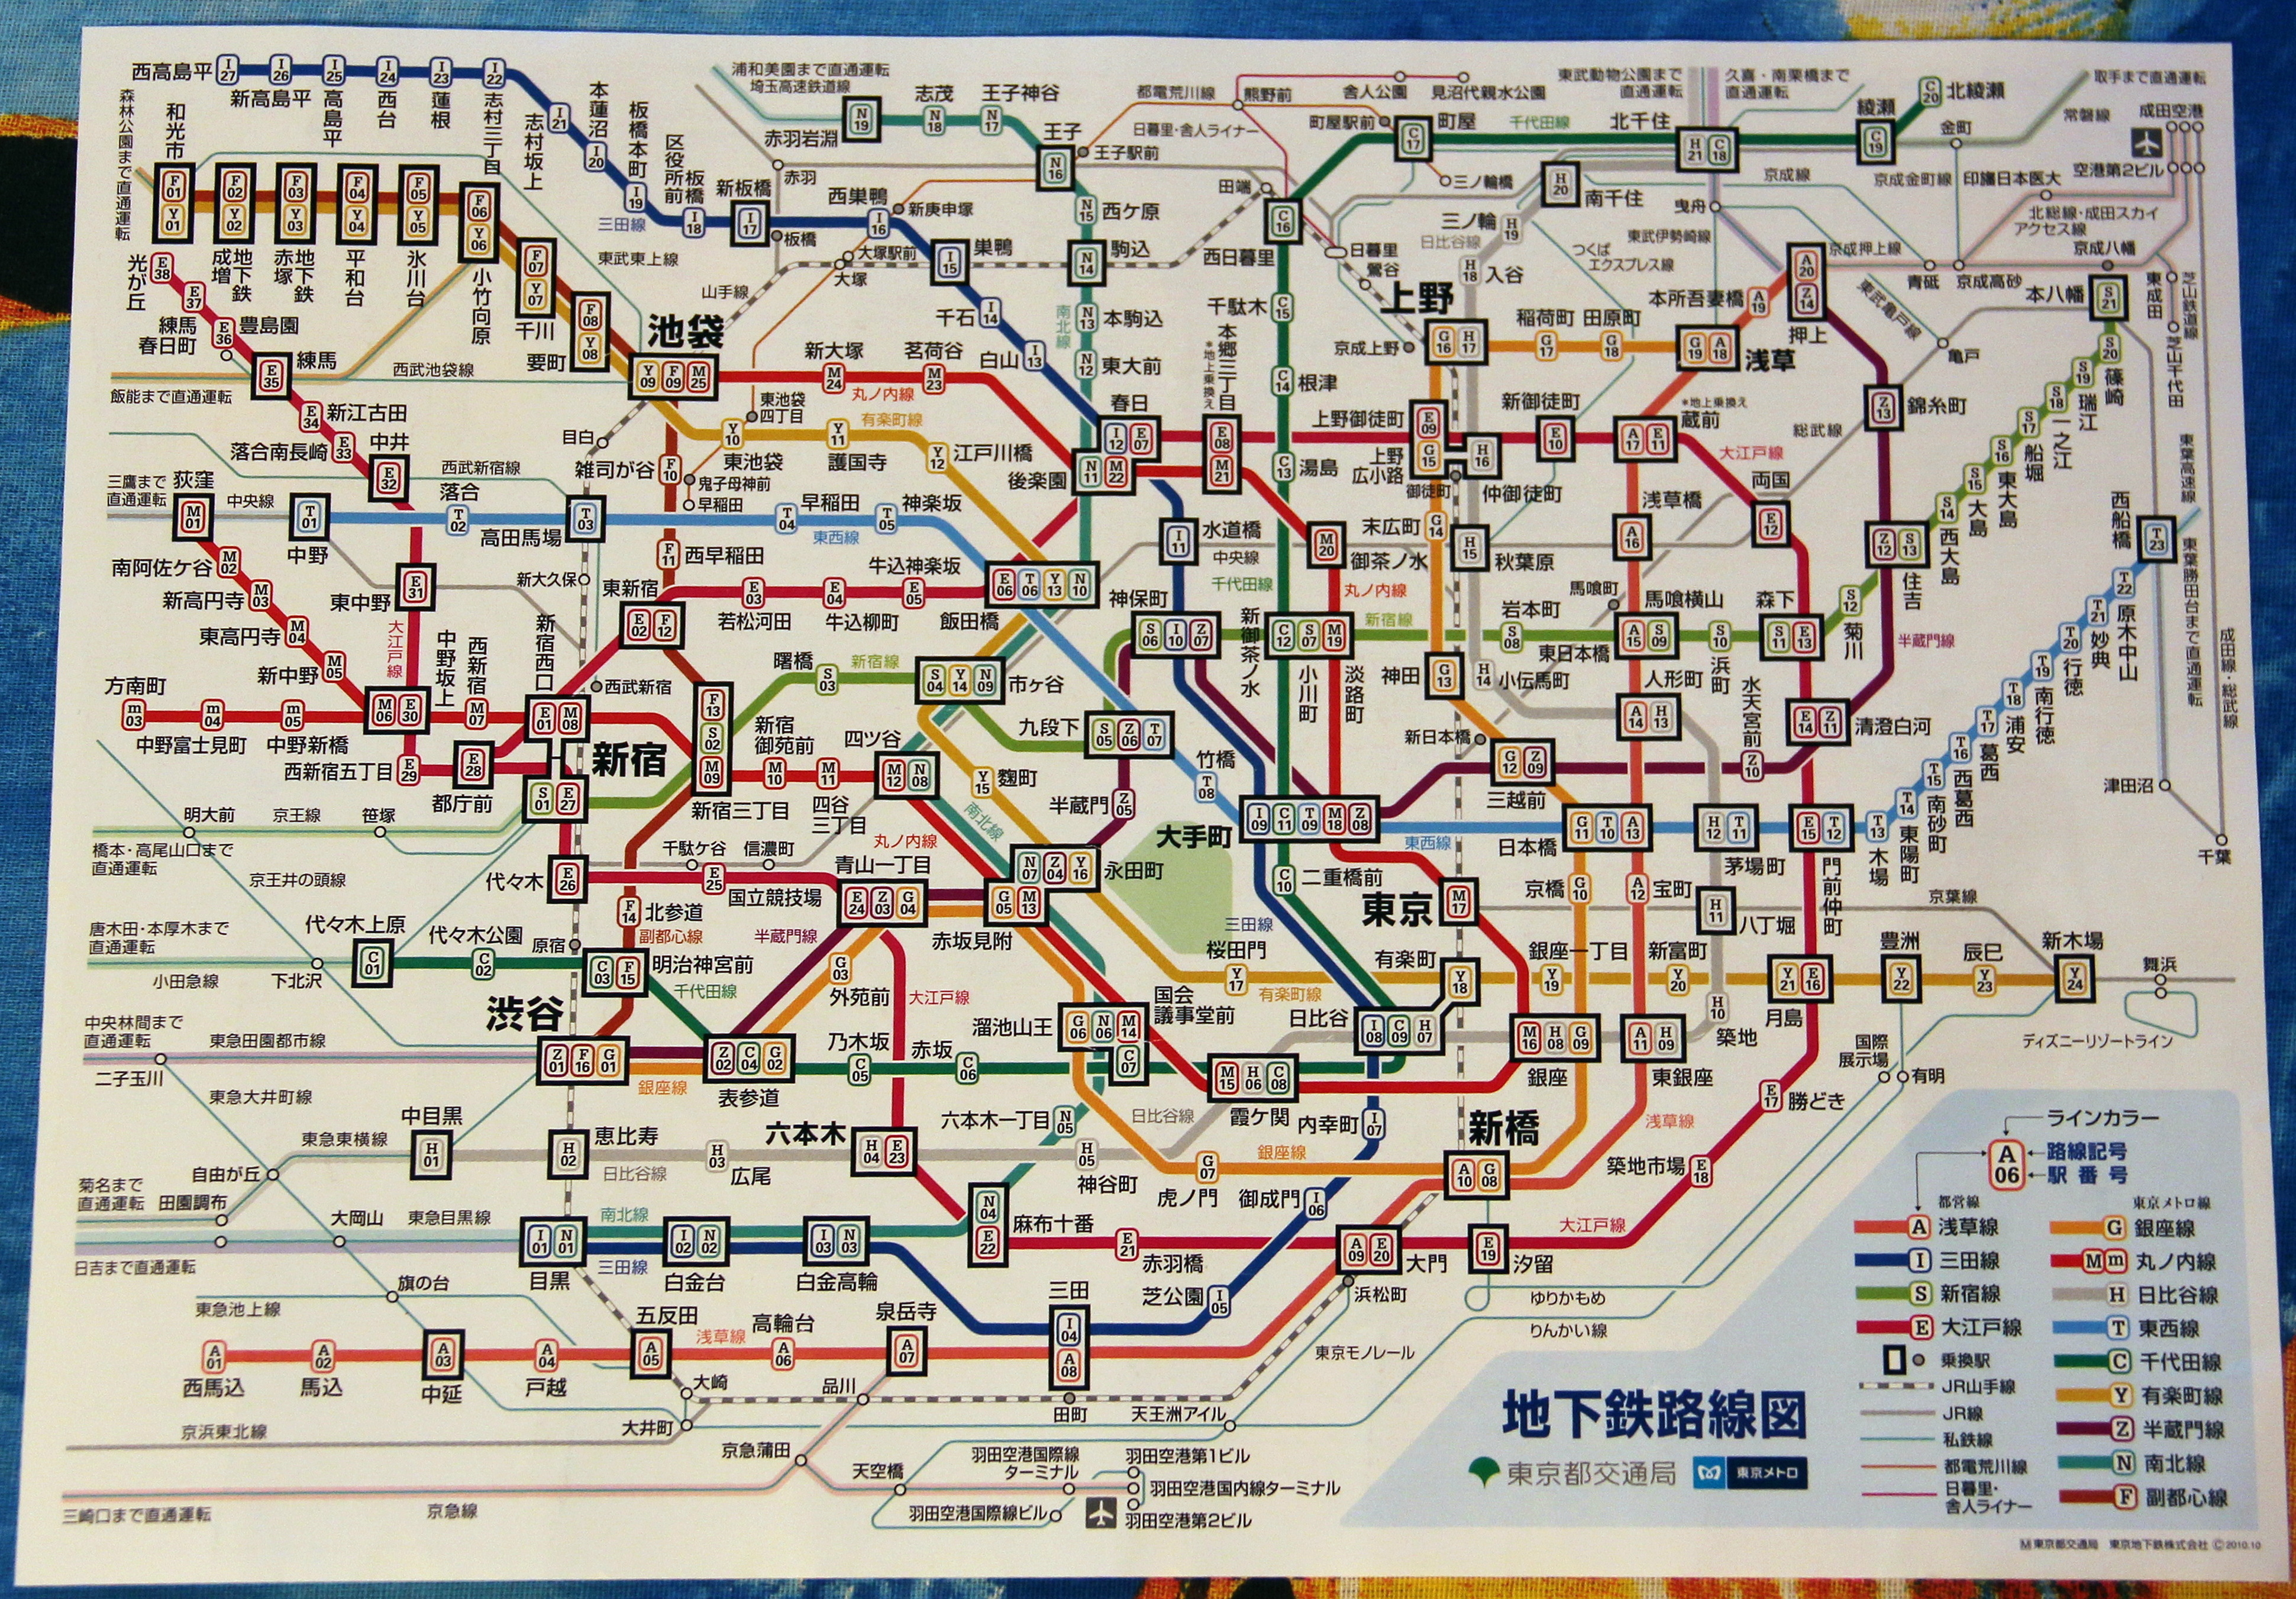 Схема метро Токио - Фрилансер Андрей Шовкопляс andy_andy - Портфолио - Работа #1700770